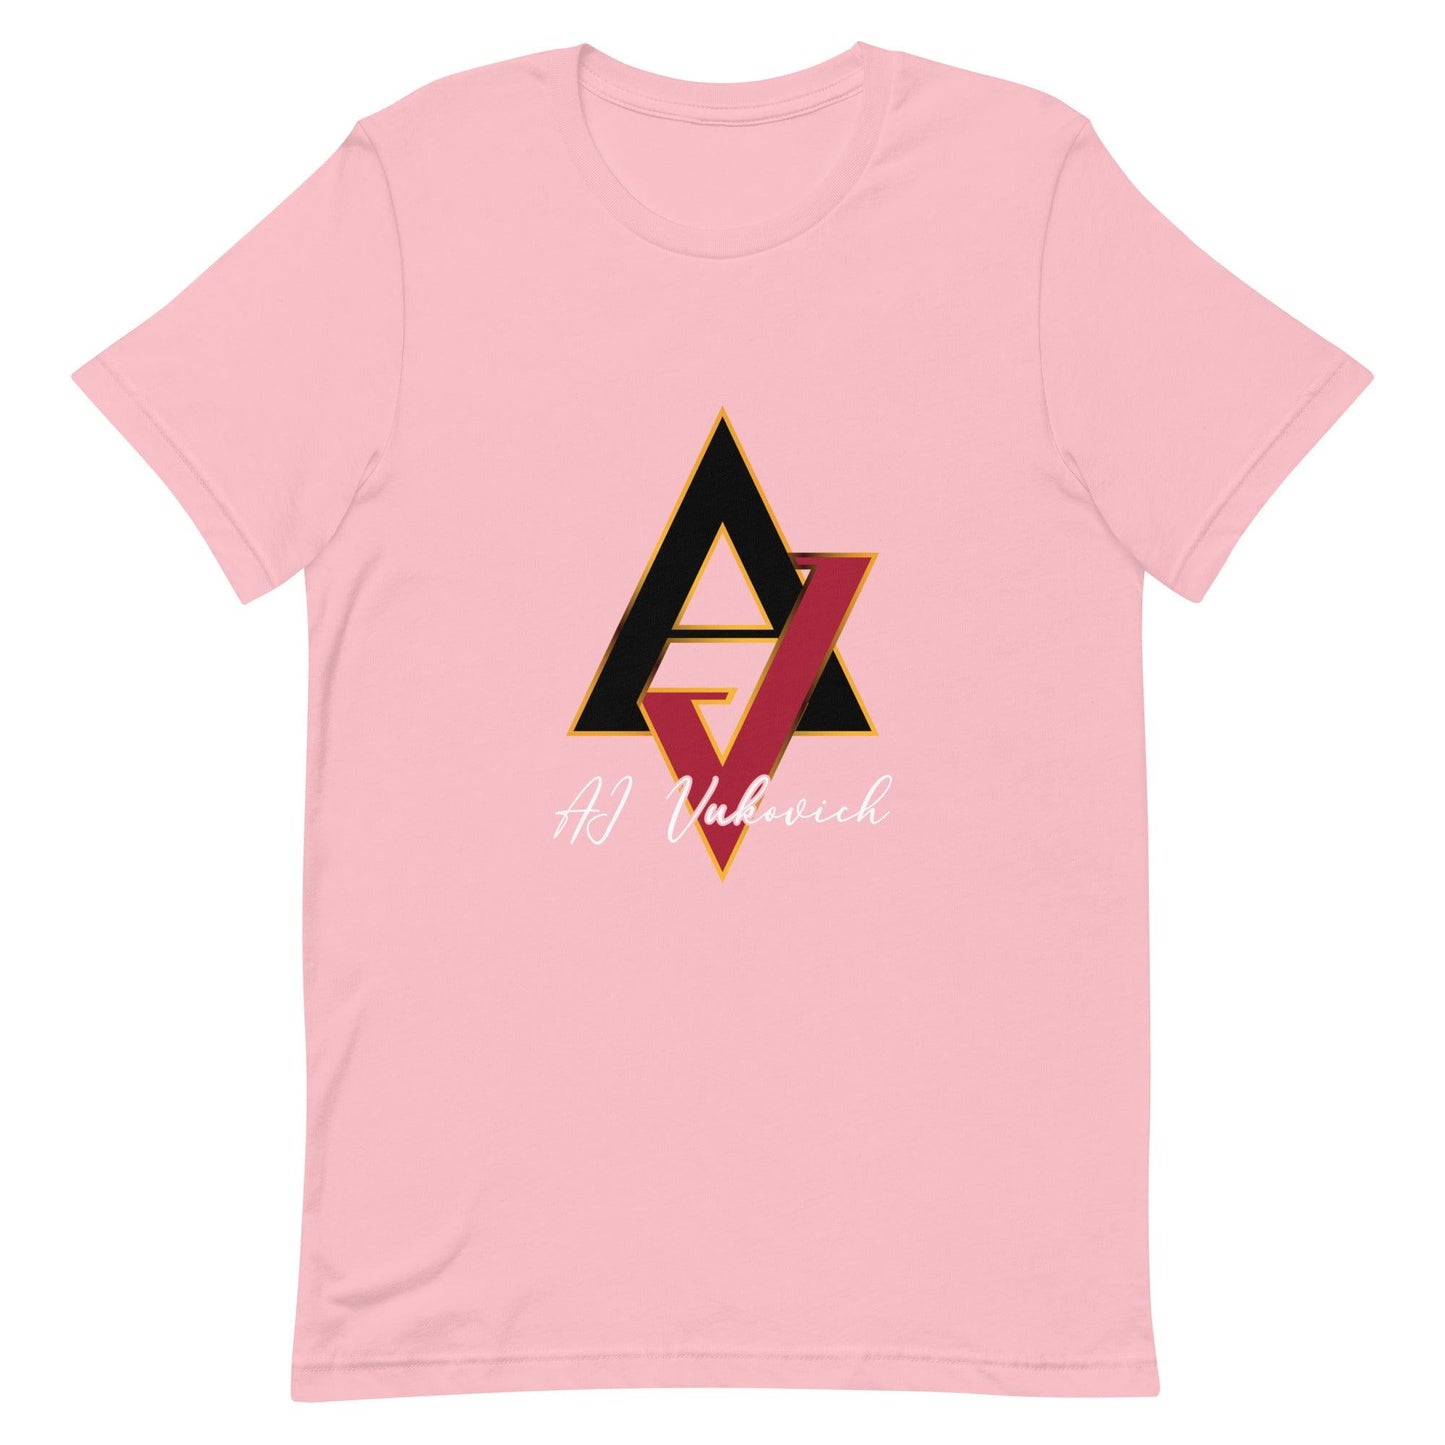 AJ Vukovich “Spotlight” t-shirt - Fan Arch